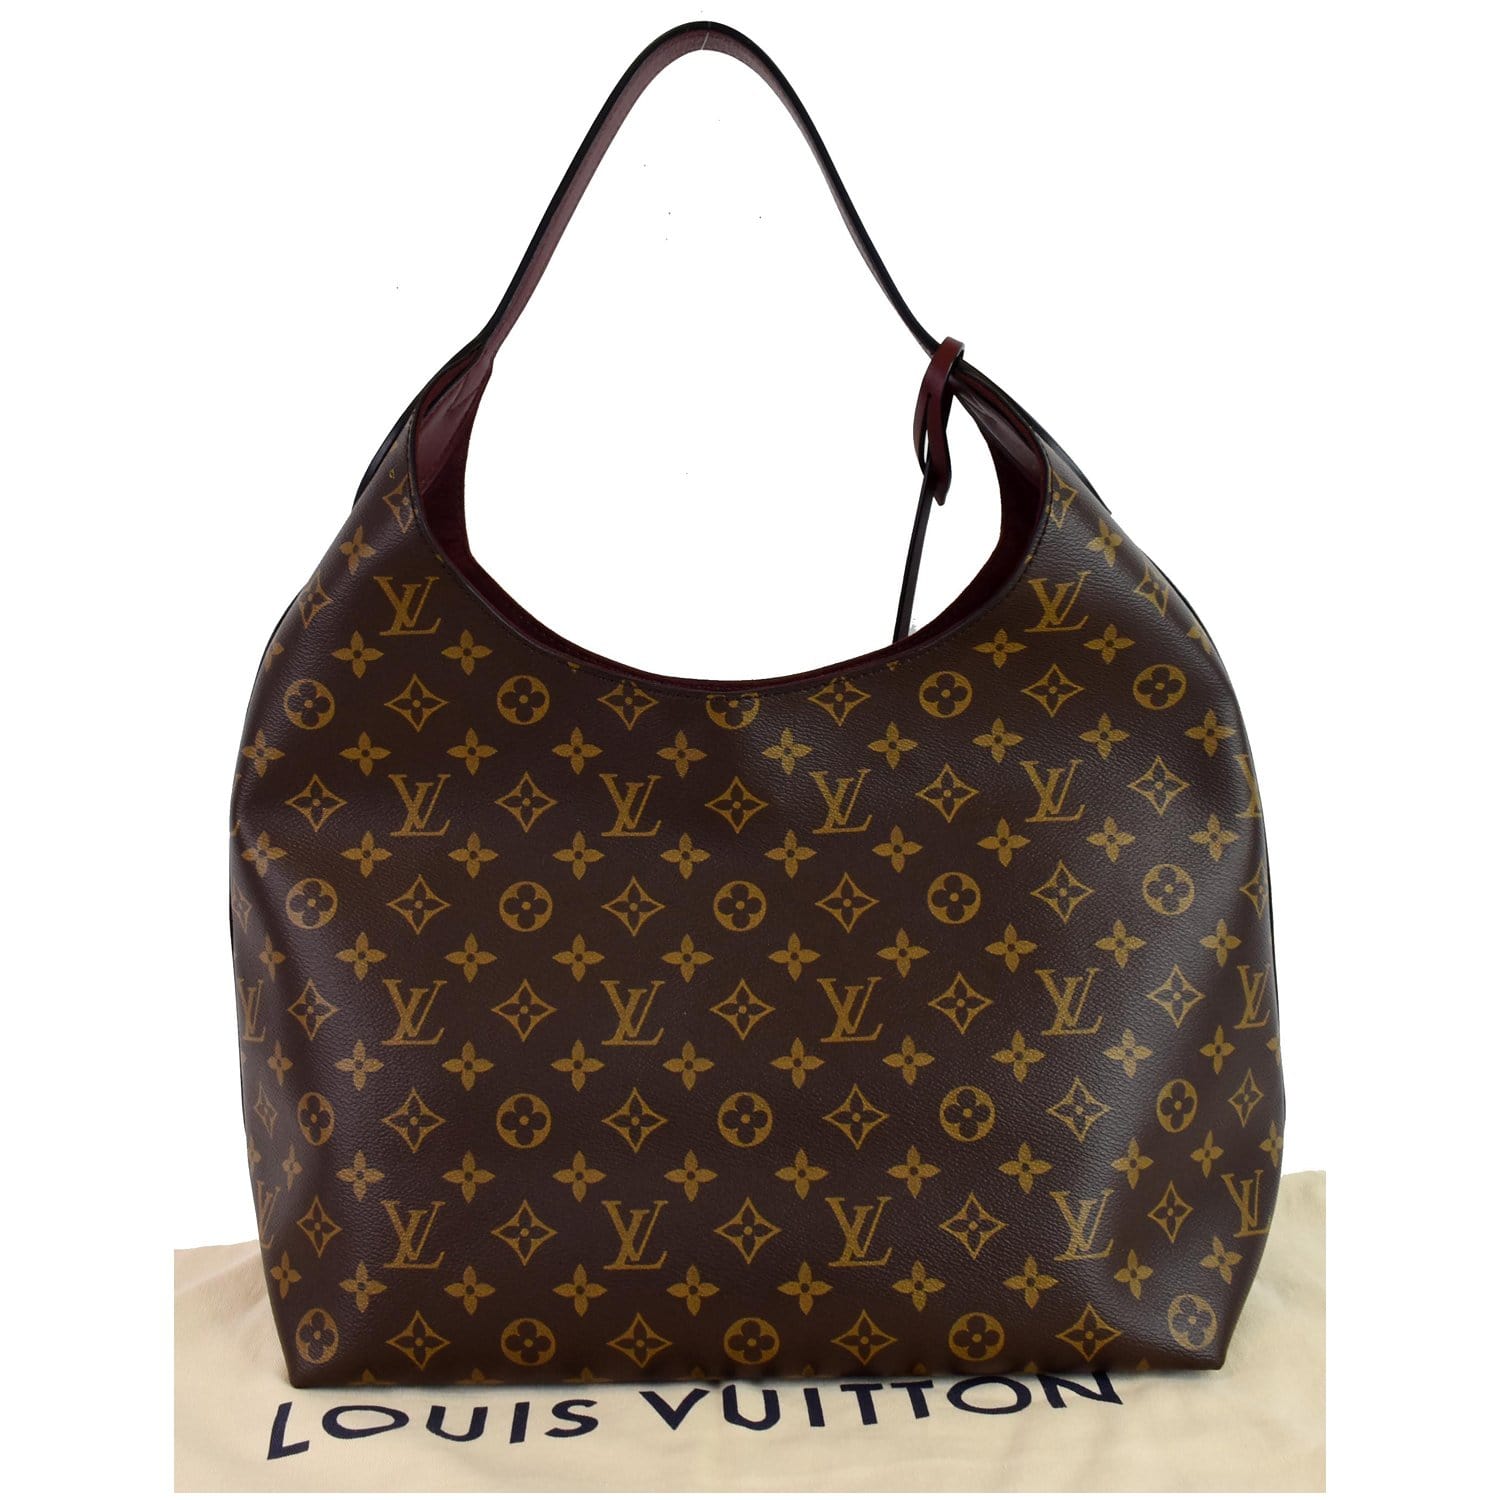 Louis Vuitton Flower Hobo Bag, Bragmybag